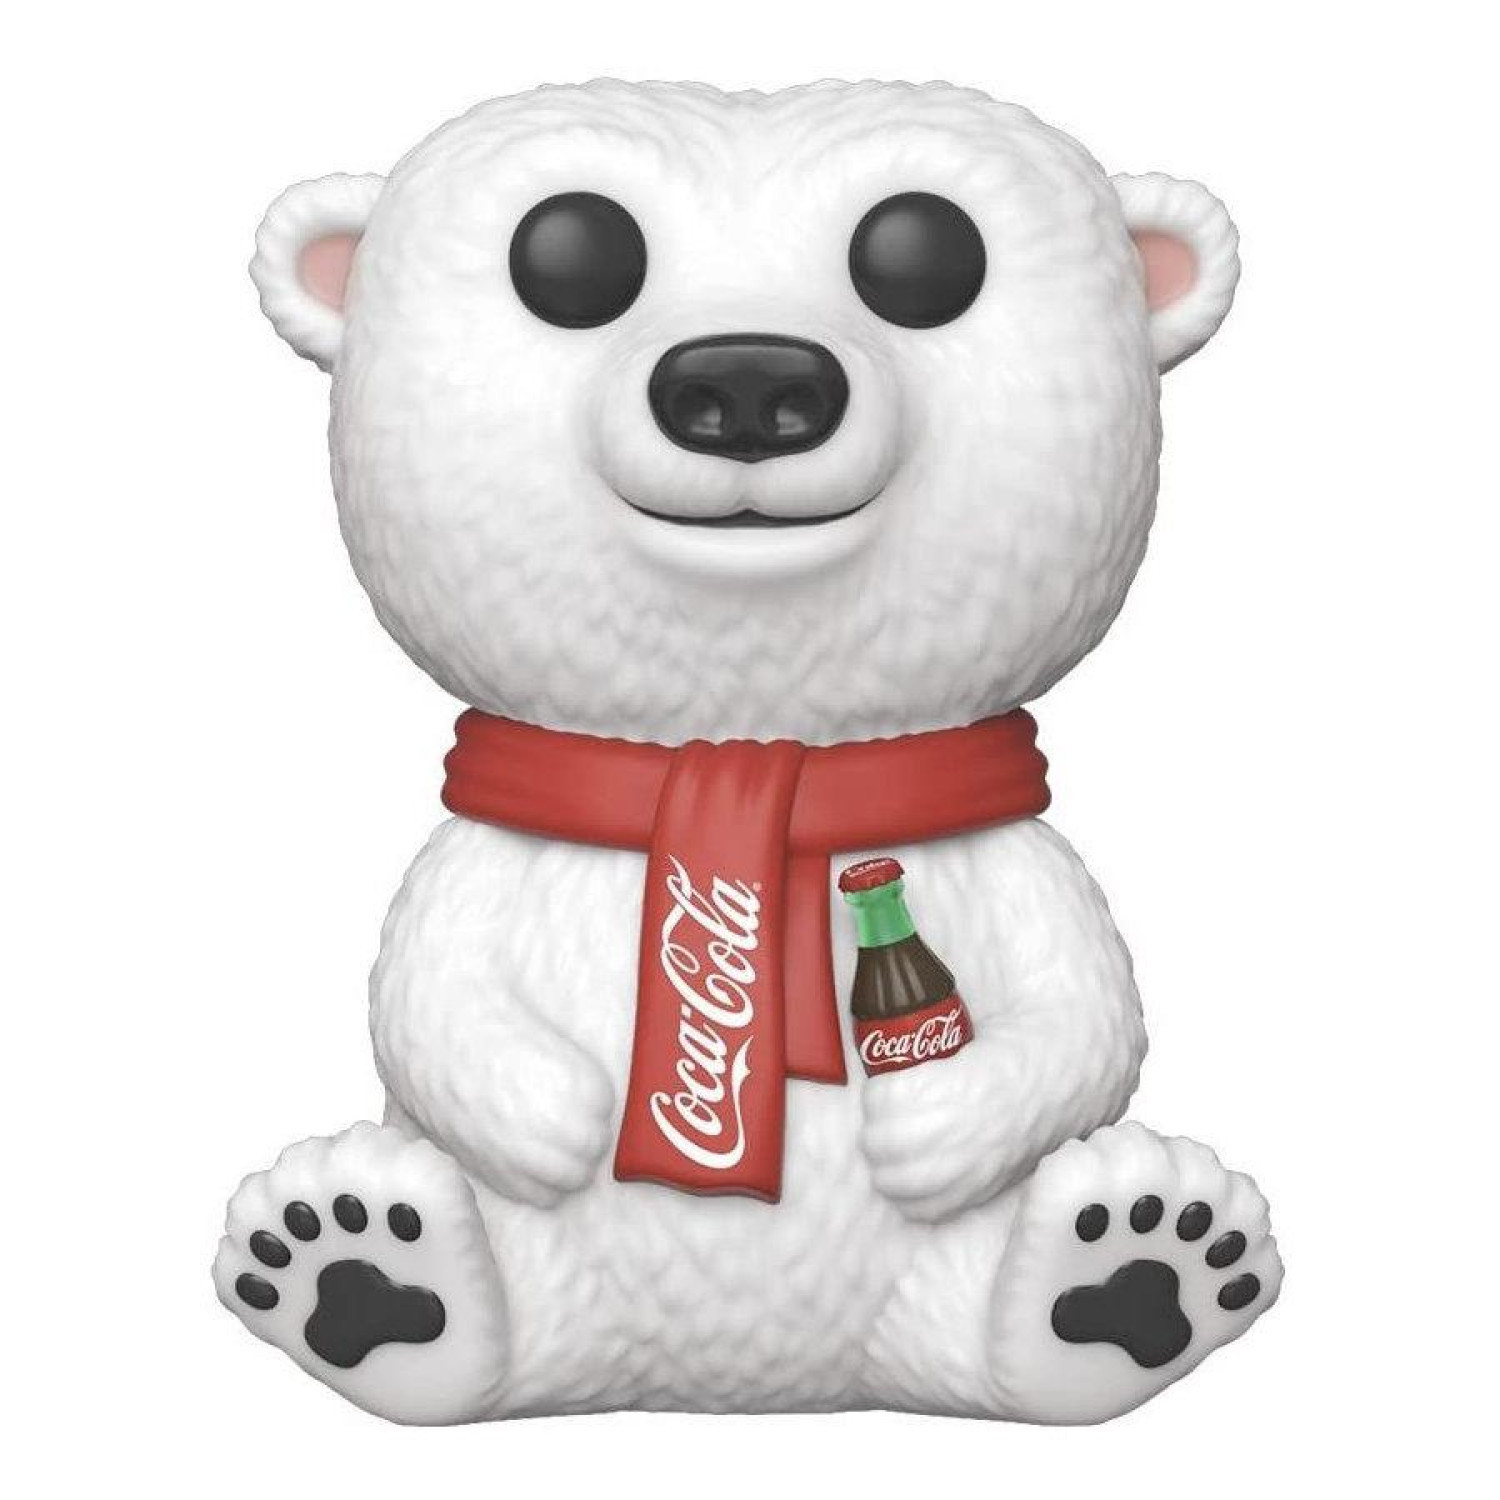 Фигурка Funko POP! Ad Icons: Coca-Cola - Polar Bear #58